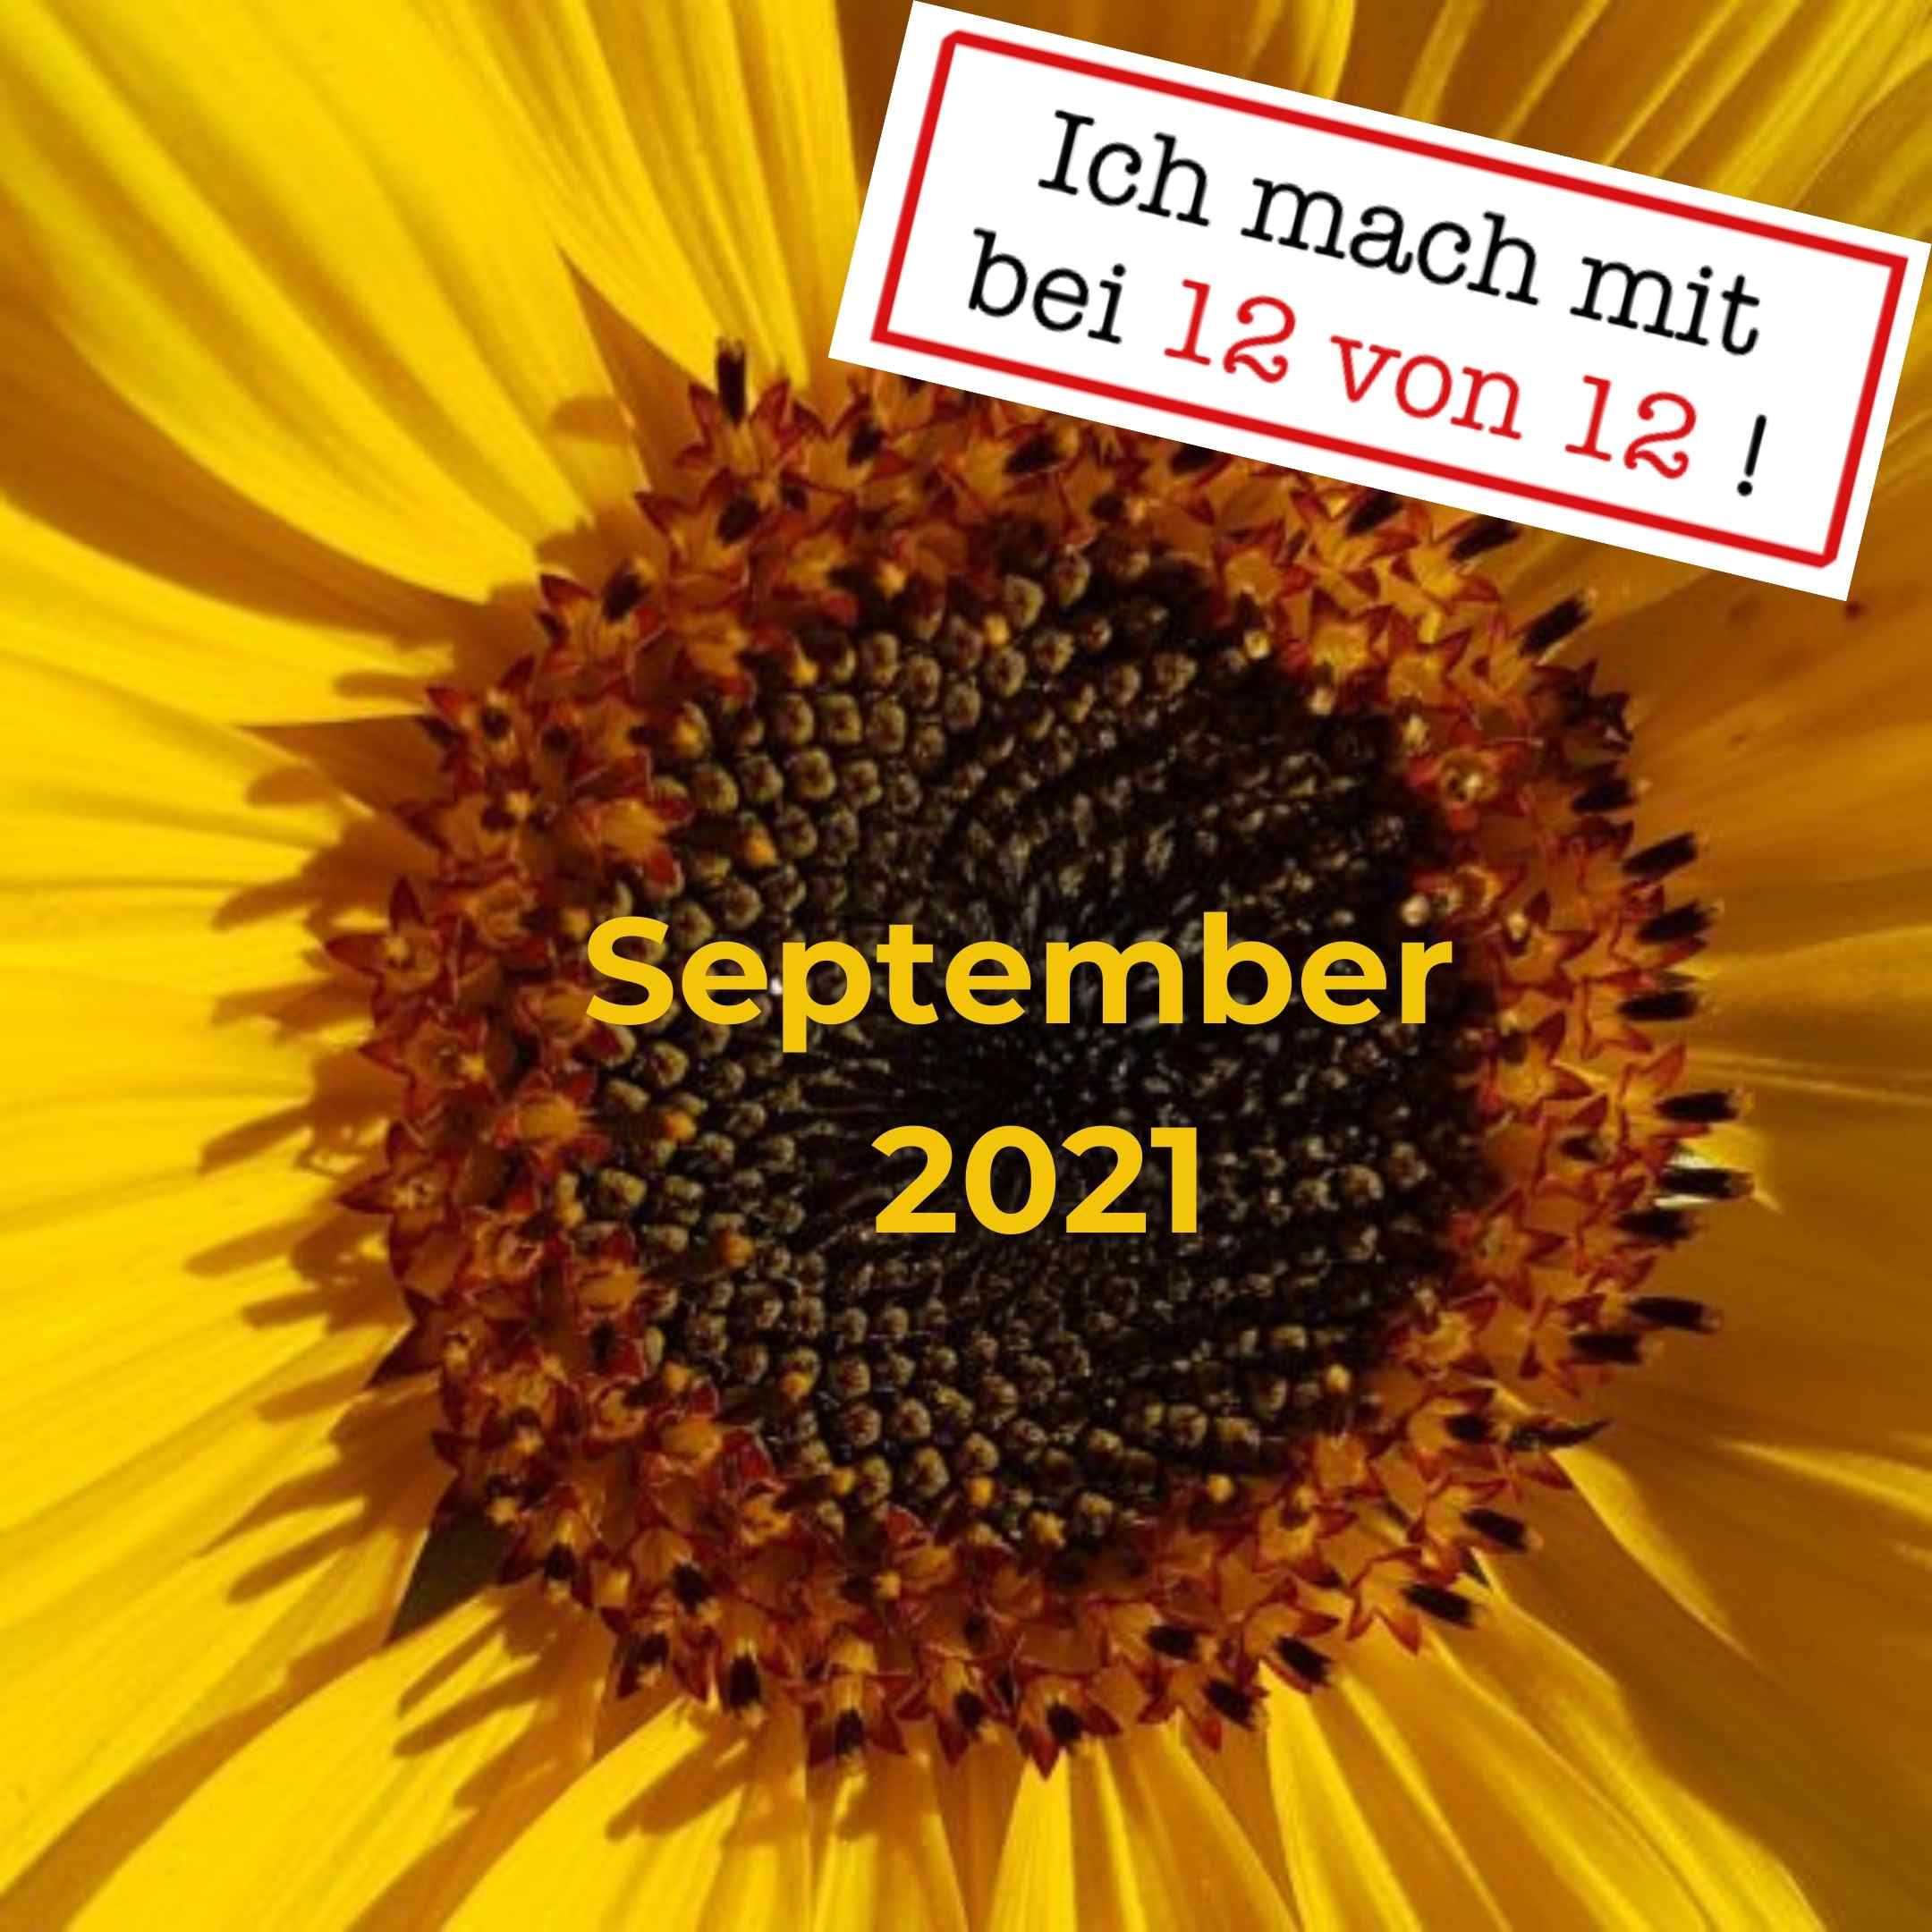 You are currently viewing 12 von 12: Mein Tag in Bildern (12. September 2021)